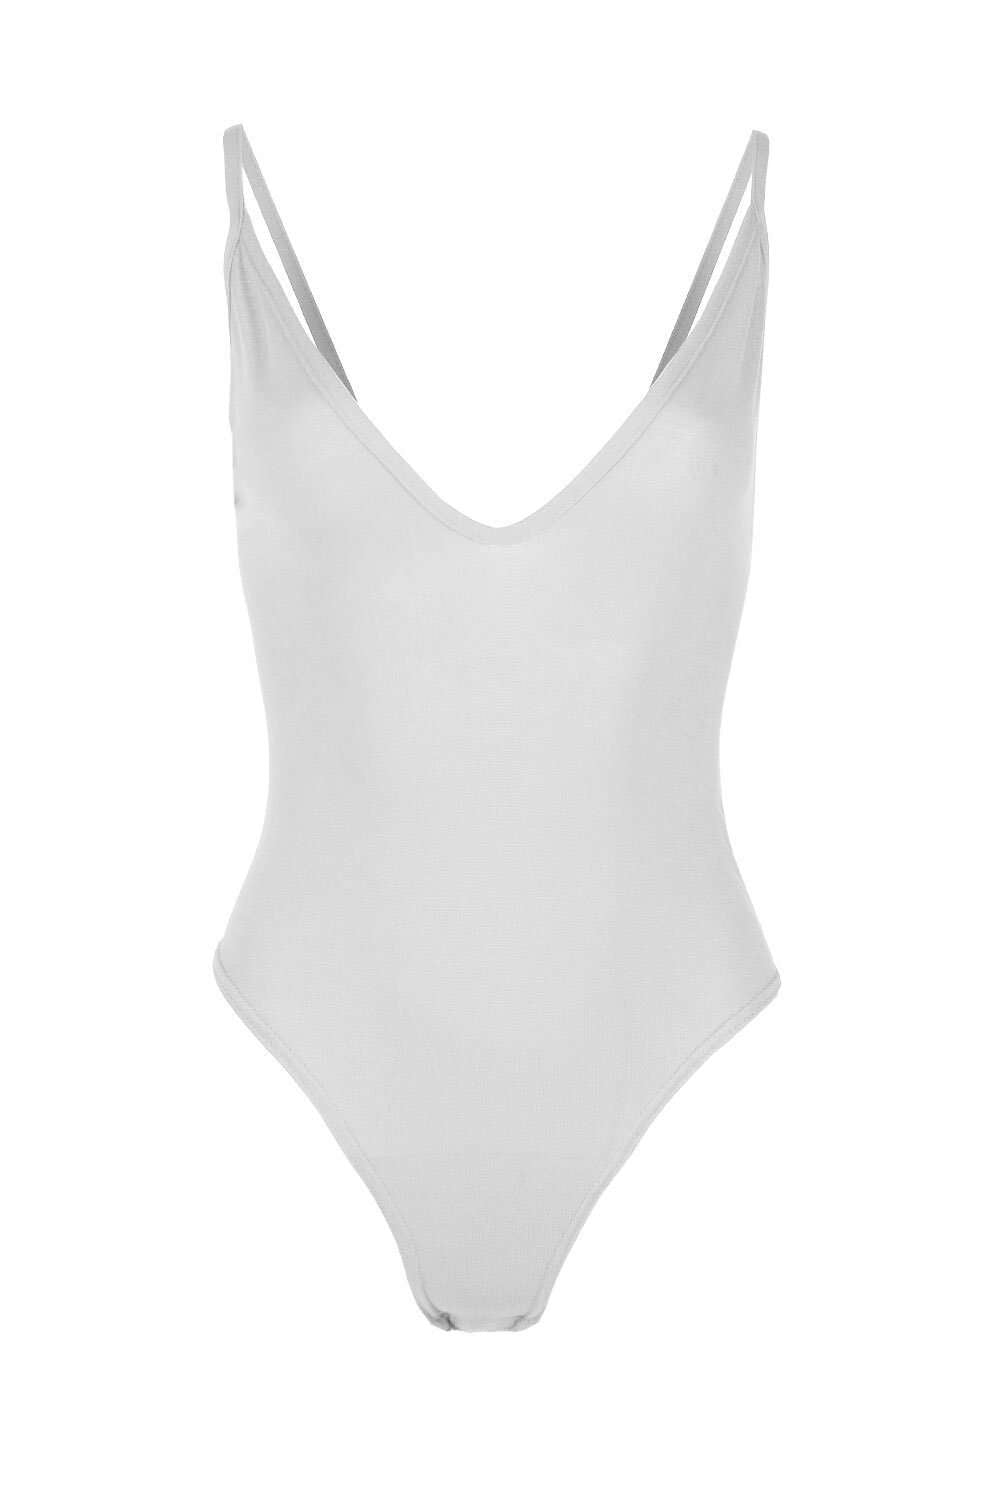 Olivia Plunge Neck Basic Jersey Bodysuit - bejealous-com